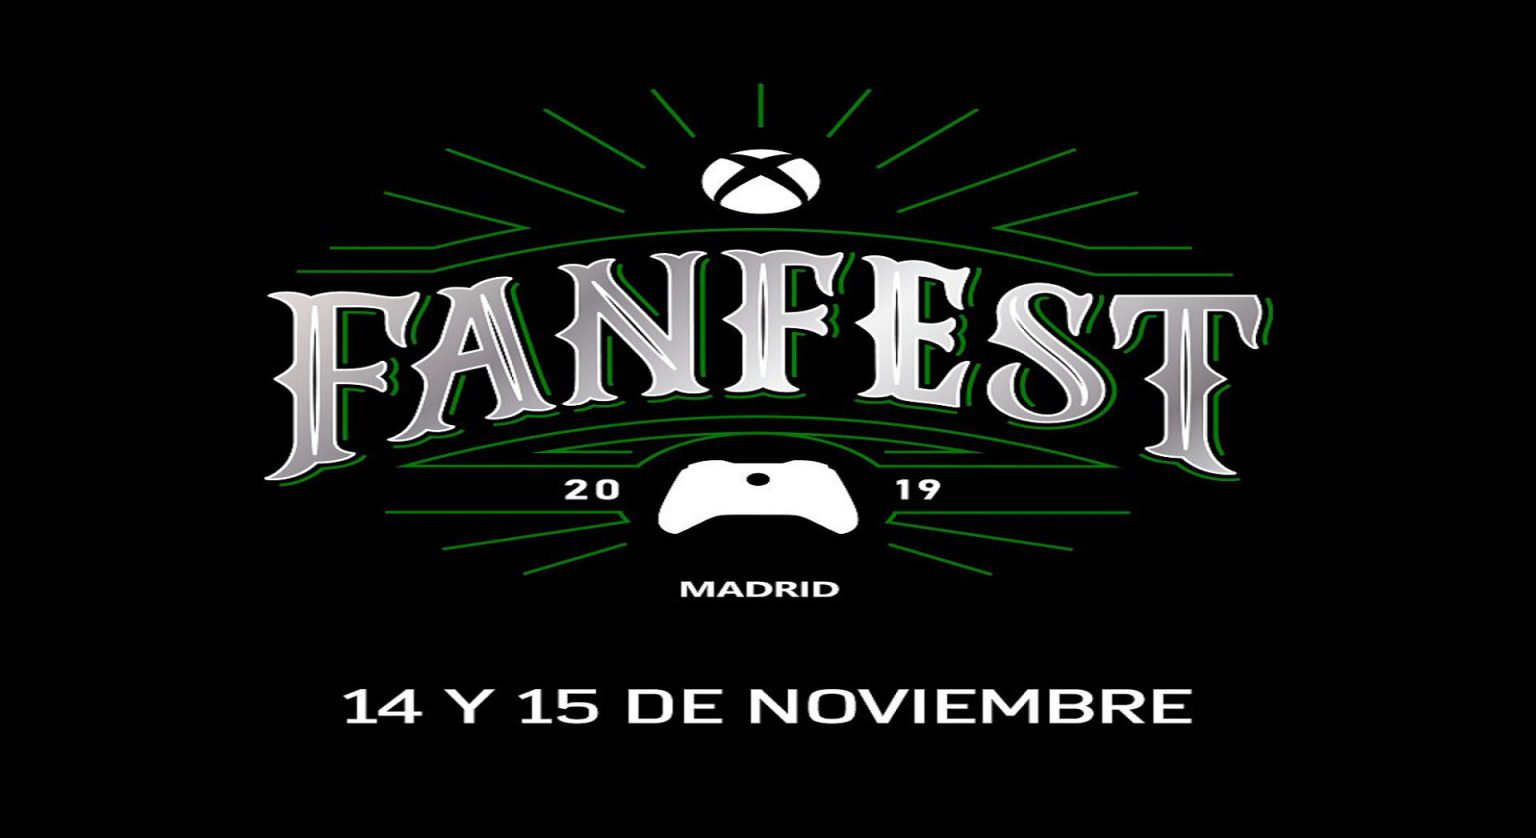 Xbox FanFest Madrid